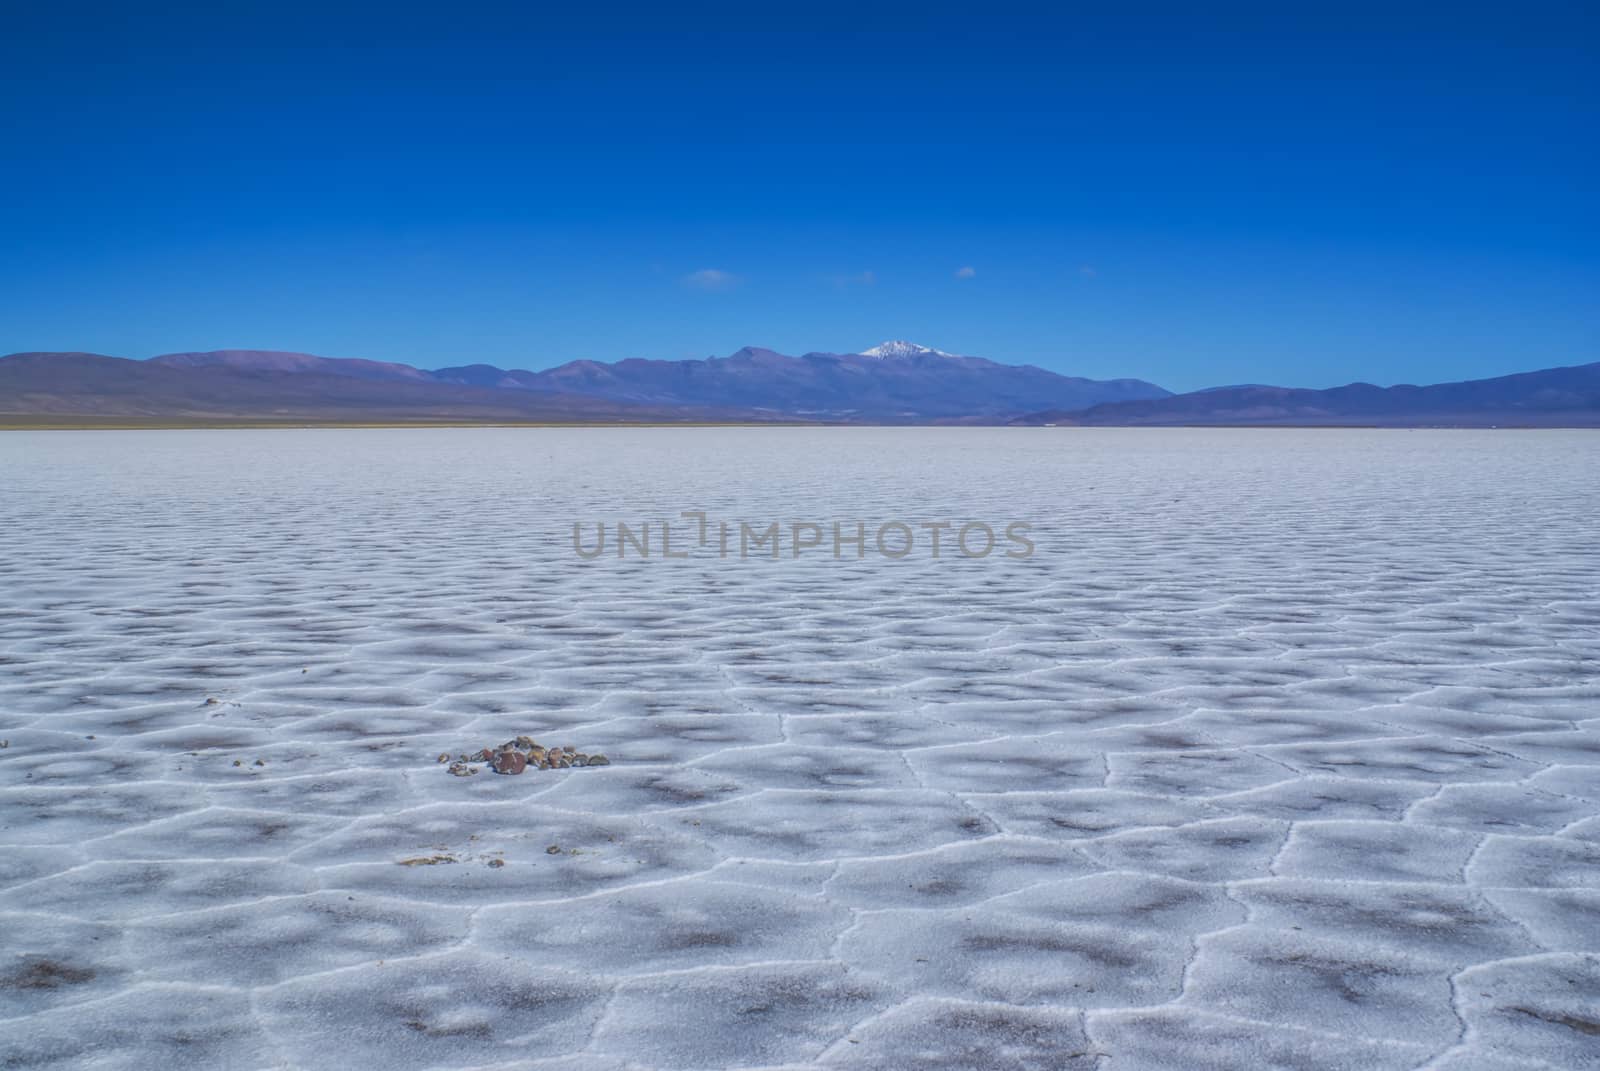 Picturesque view of salt planes Salina Grandes in Argentina